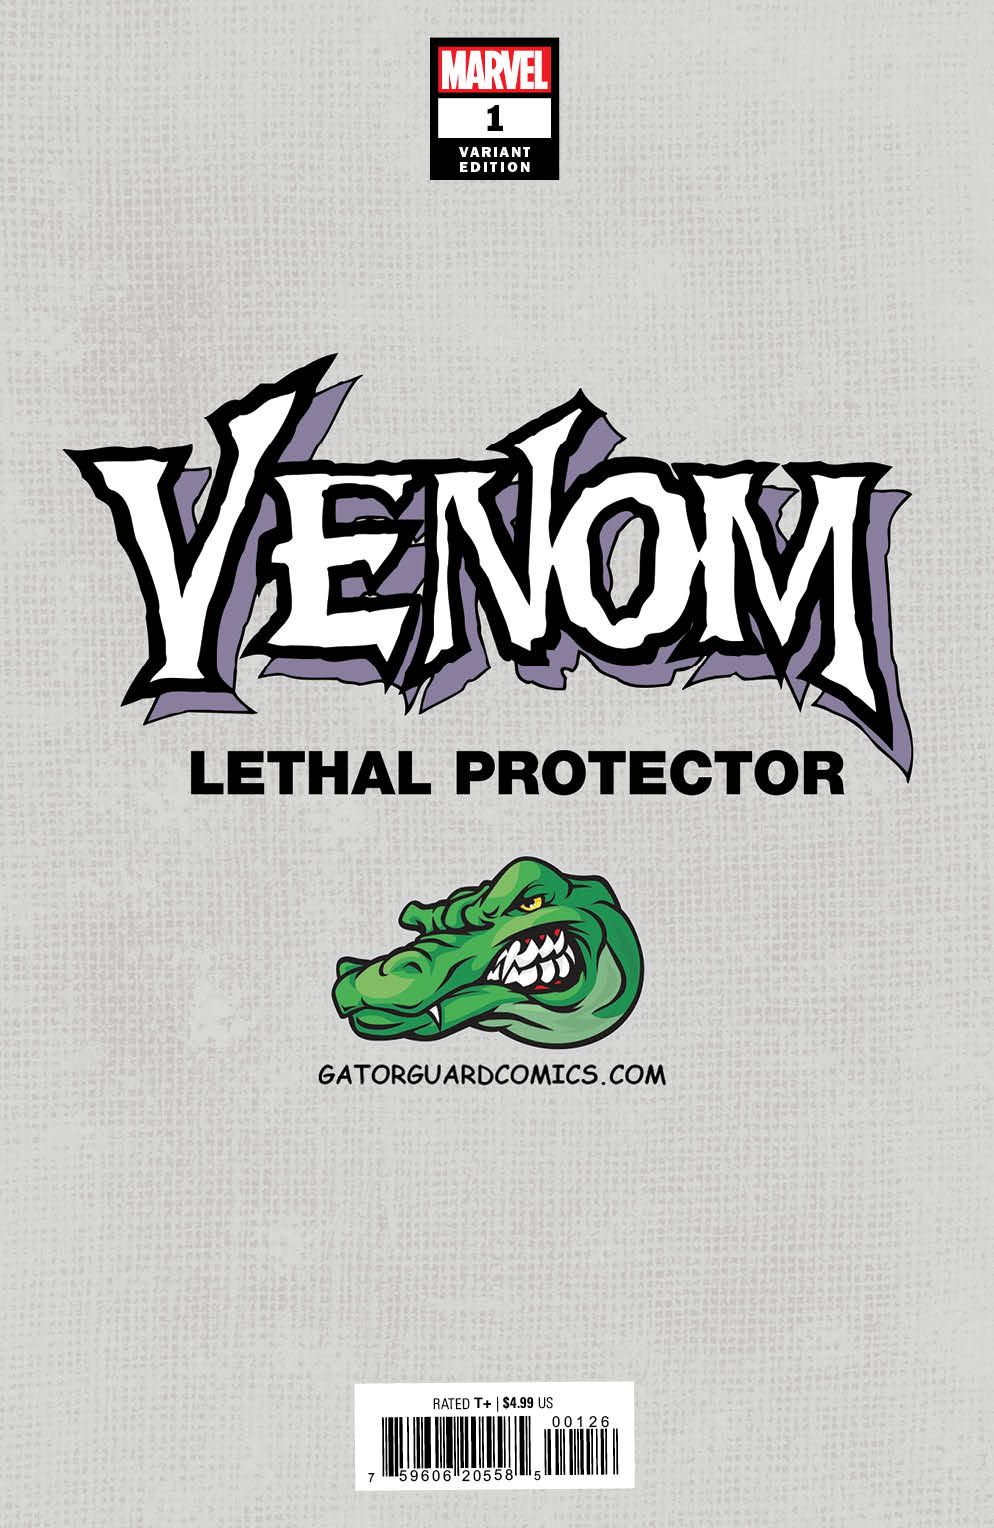 Venom Lethal Protector II #1 GATORGUARD Exclusive Variant Comic Book- Sam de la Rosa - Trade Dress